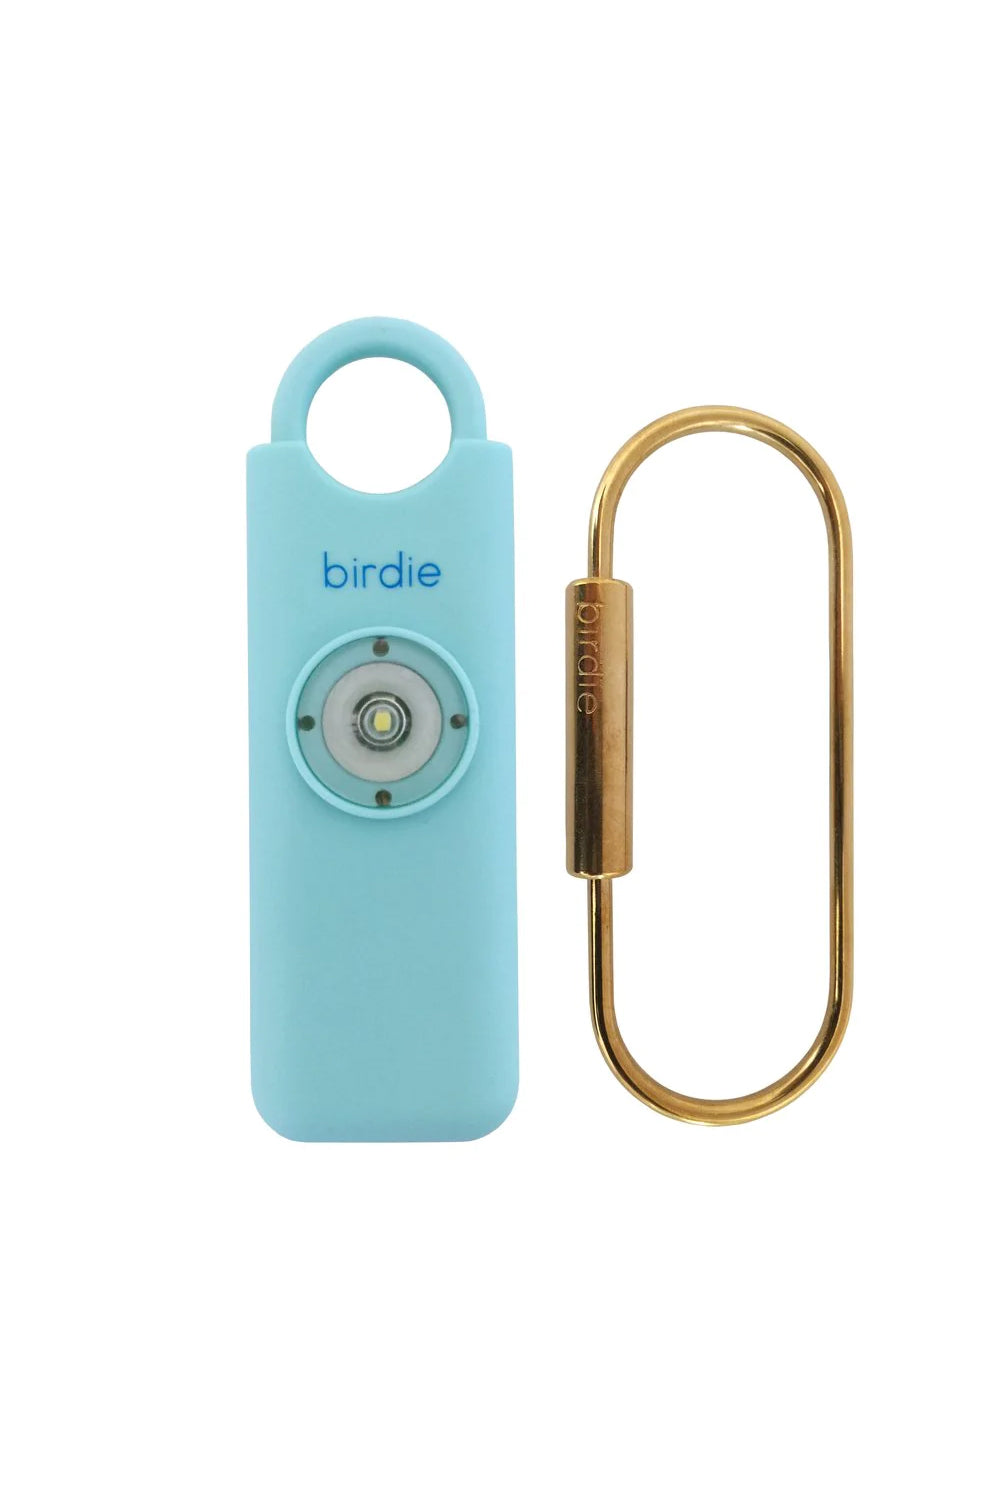 She's Birdie: Alarm Keychain - Aqua | Makk Fashions